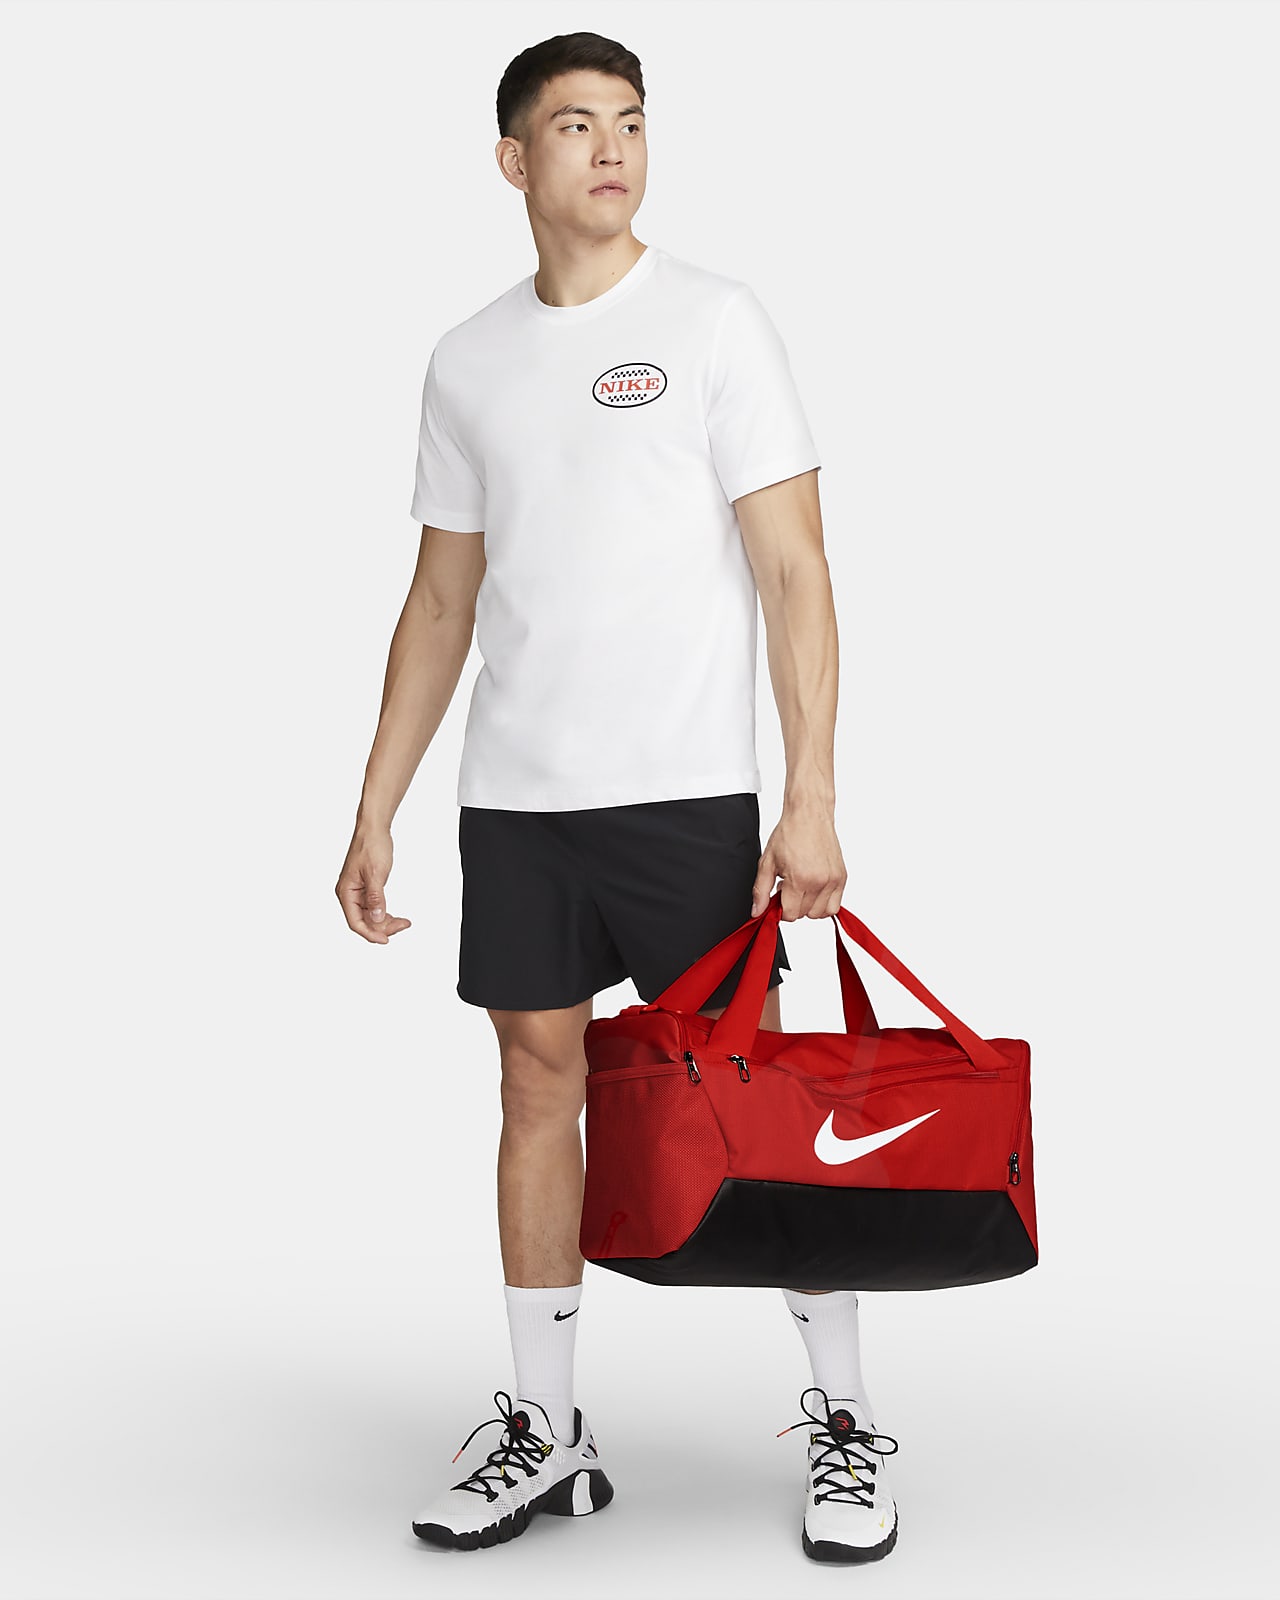 Nike Brasilia 9.5 Training Duffel Bag (Small, 41L). Nike SG